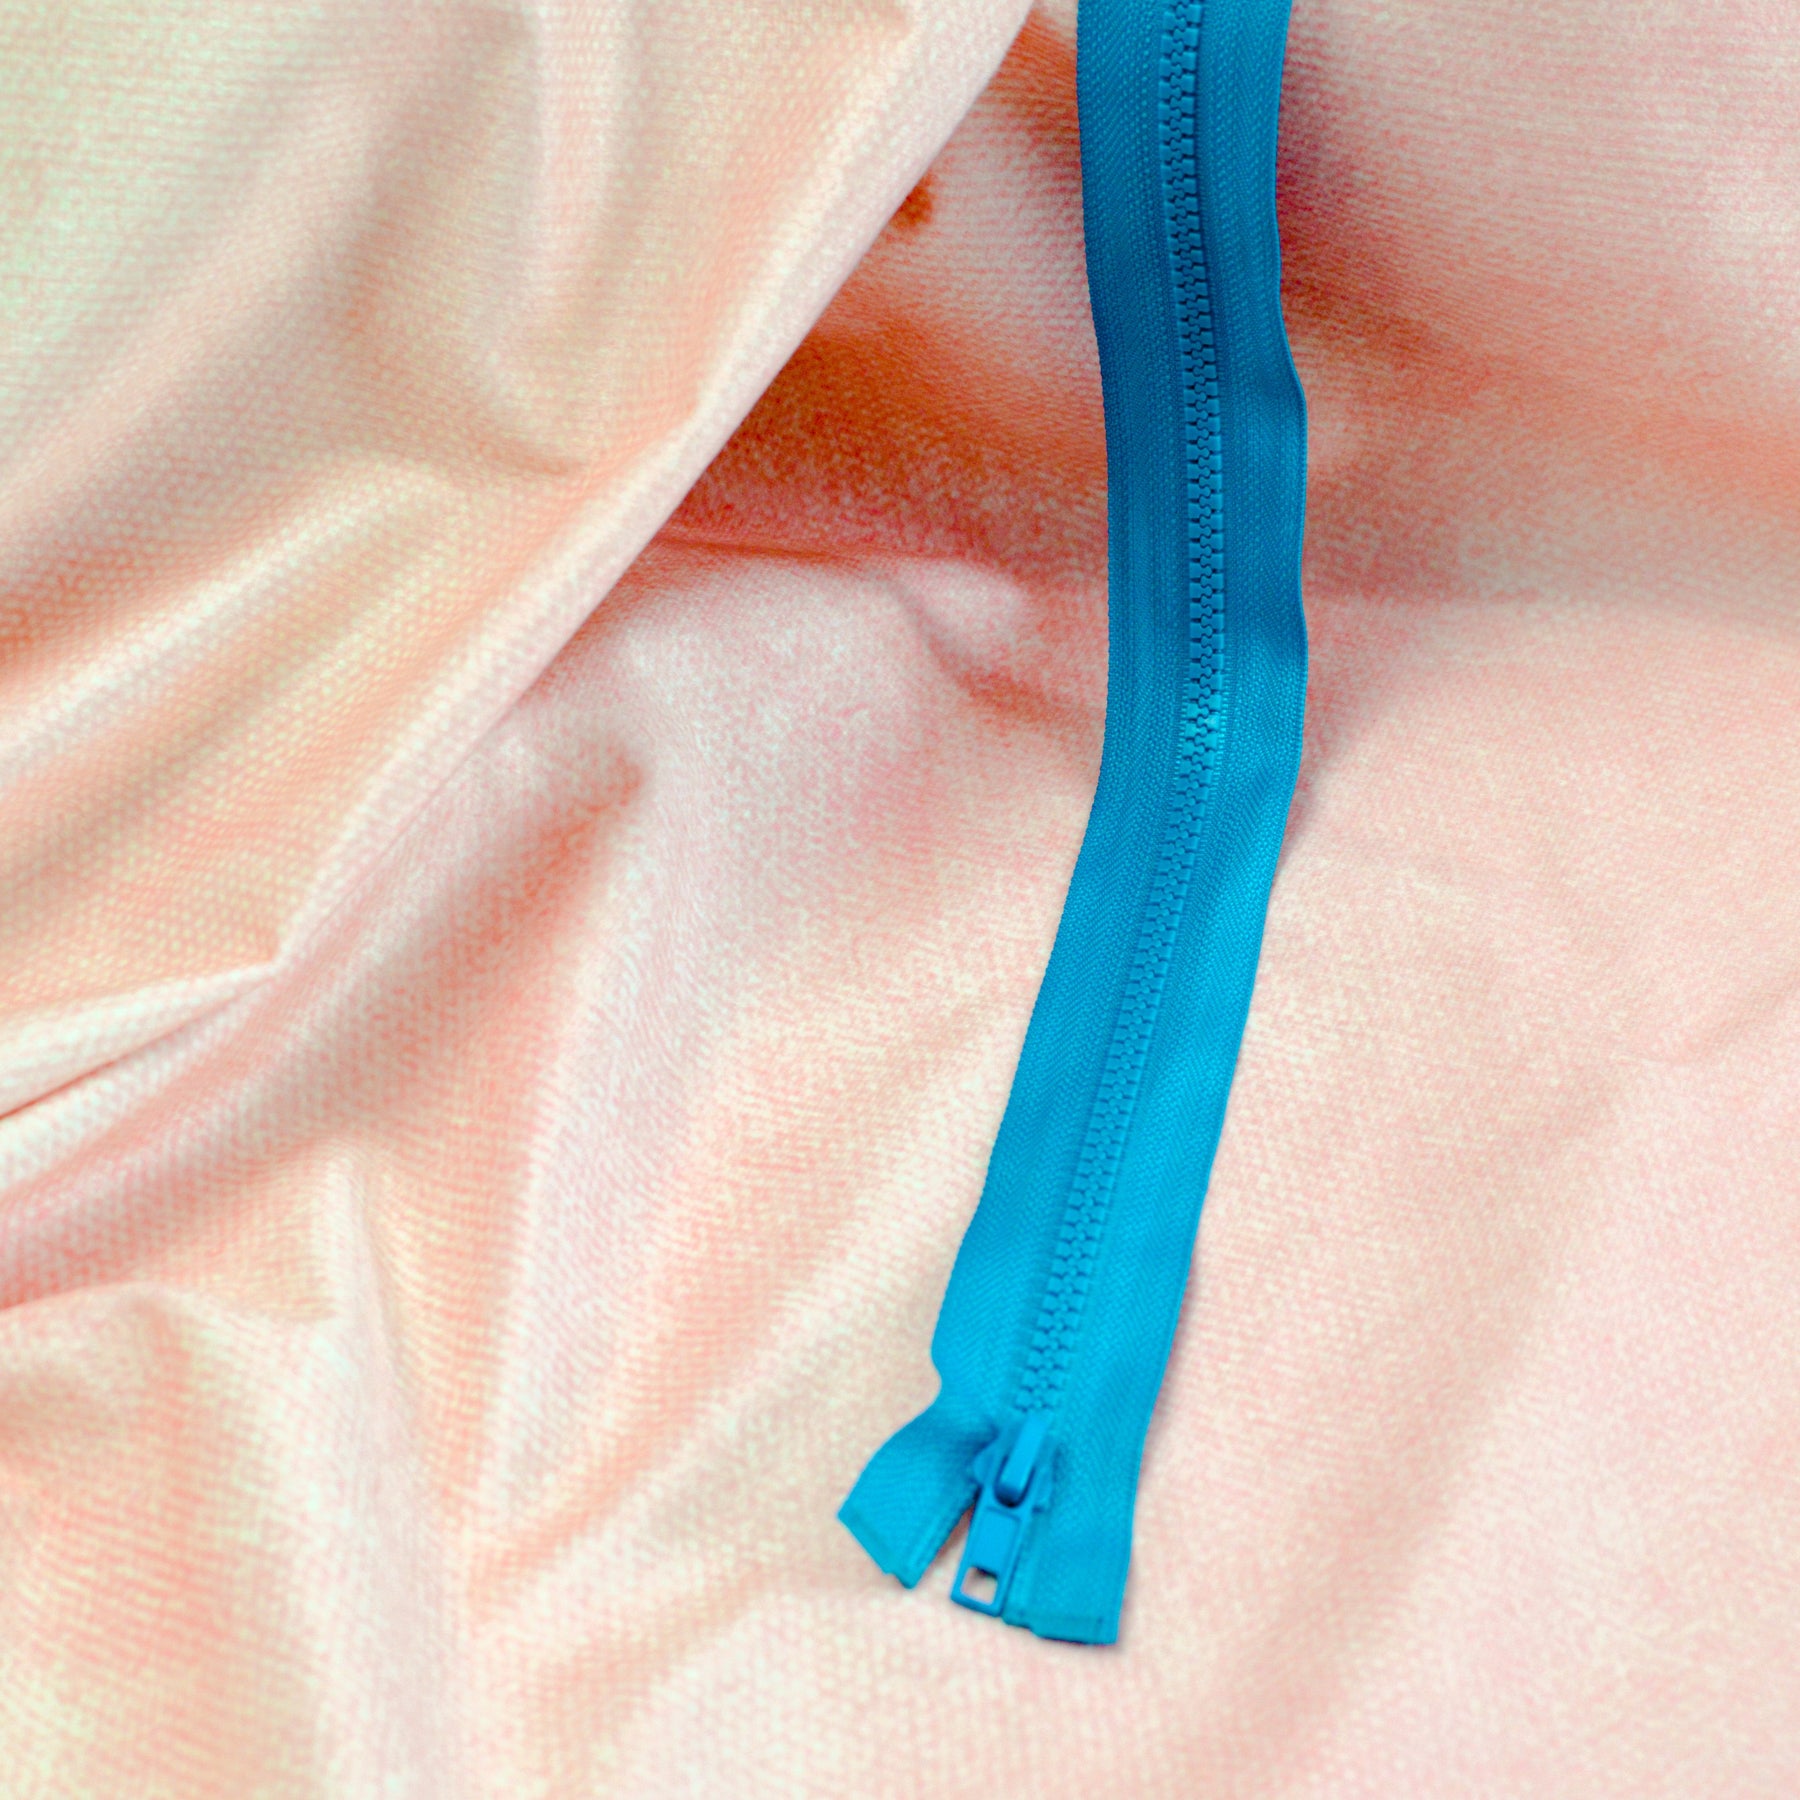 Jacken Reißverschluss 70 cm Türkis blau Stück poshpinks